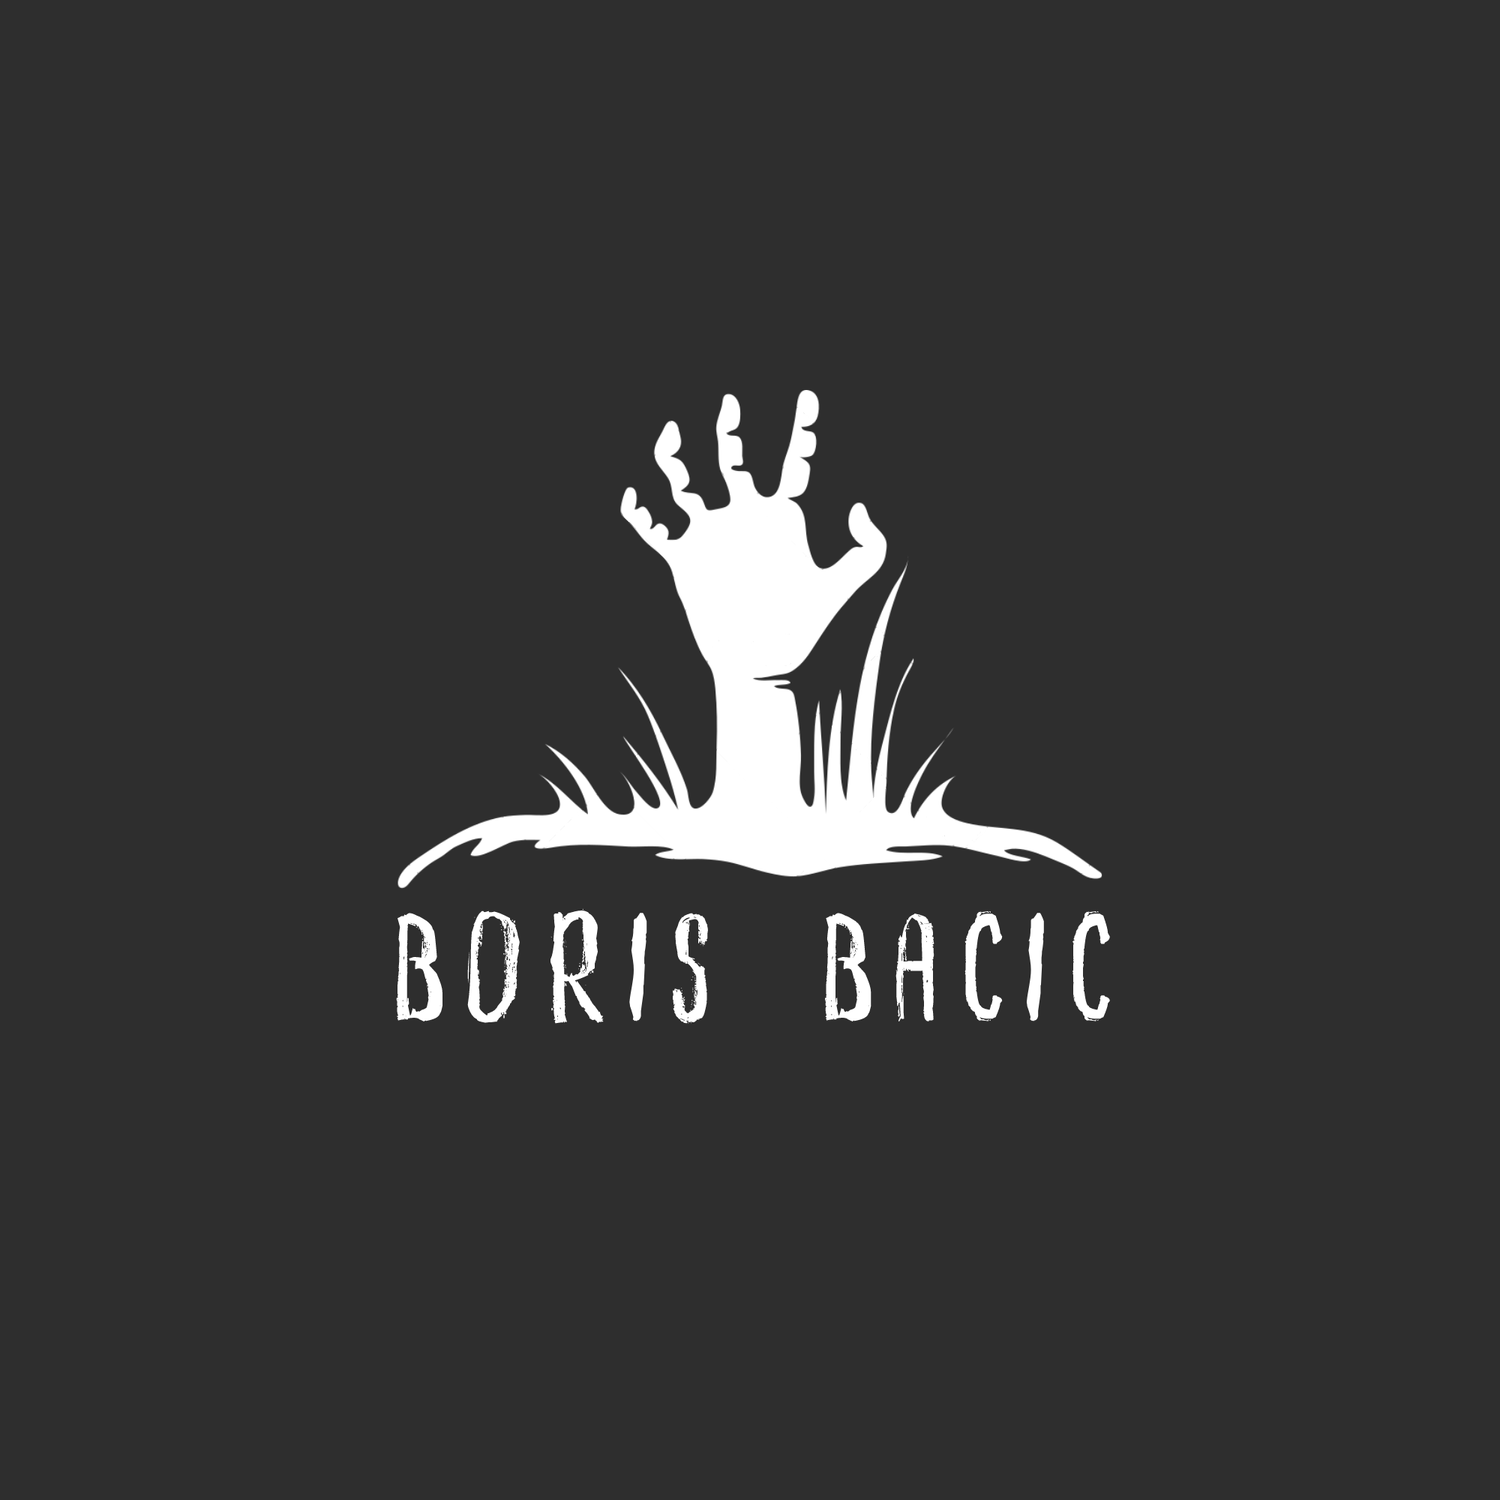 Boris Bacic